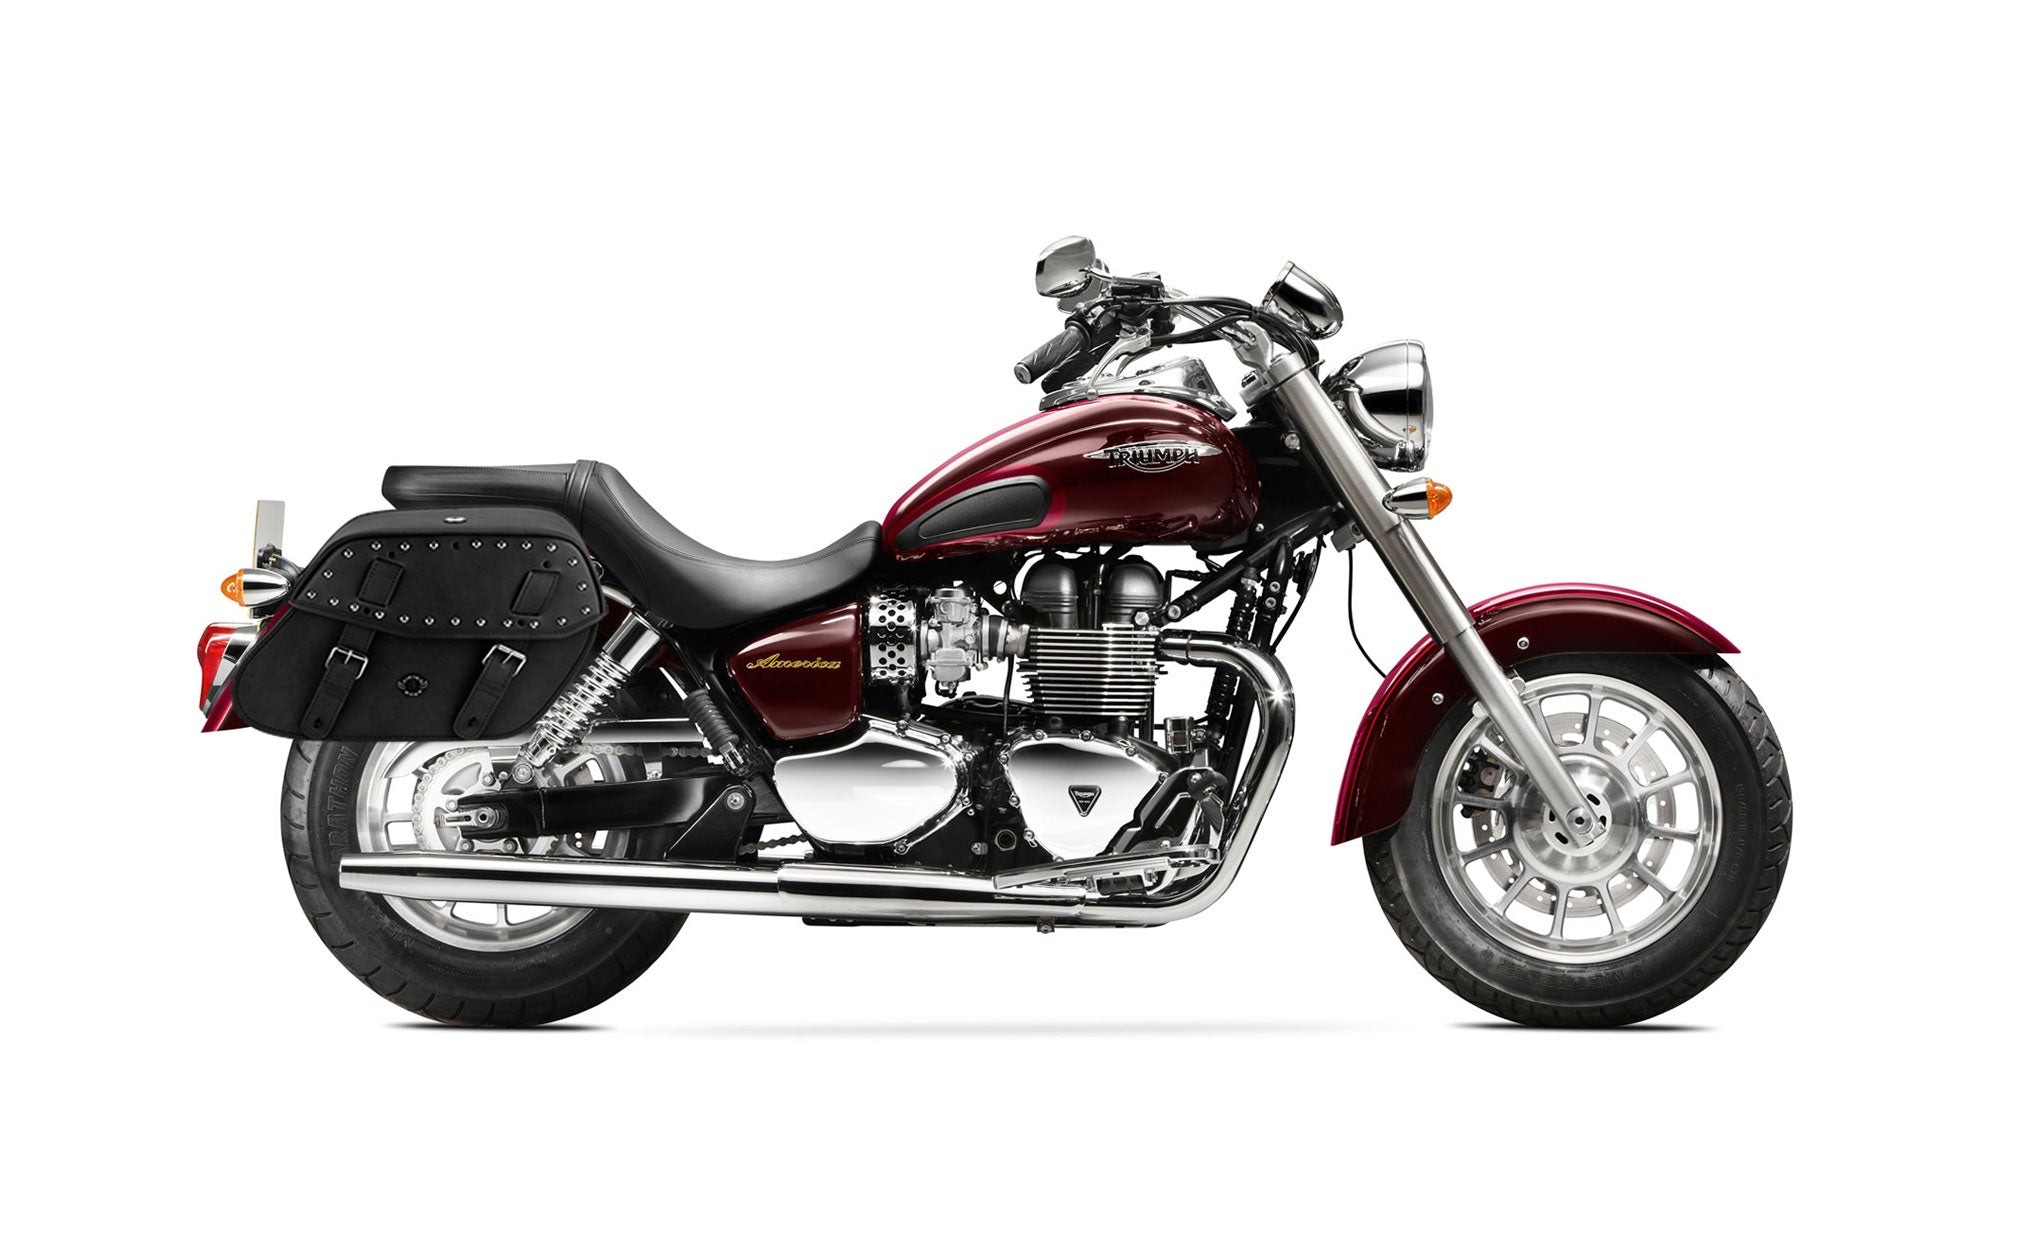 Viking Odin Large Triumph America Studded Leather Motorcycle Saddlebags on Bike Photo @expand